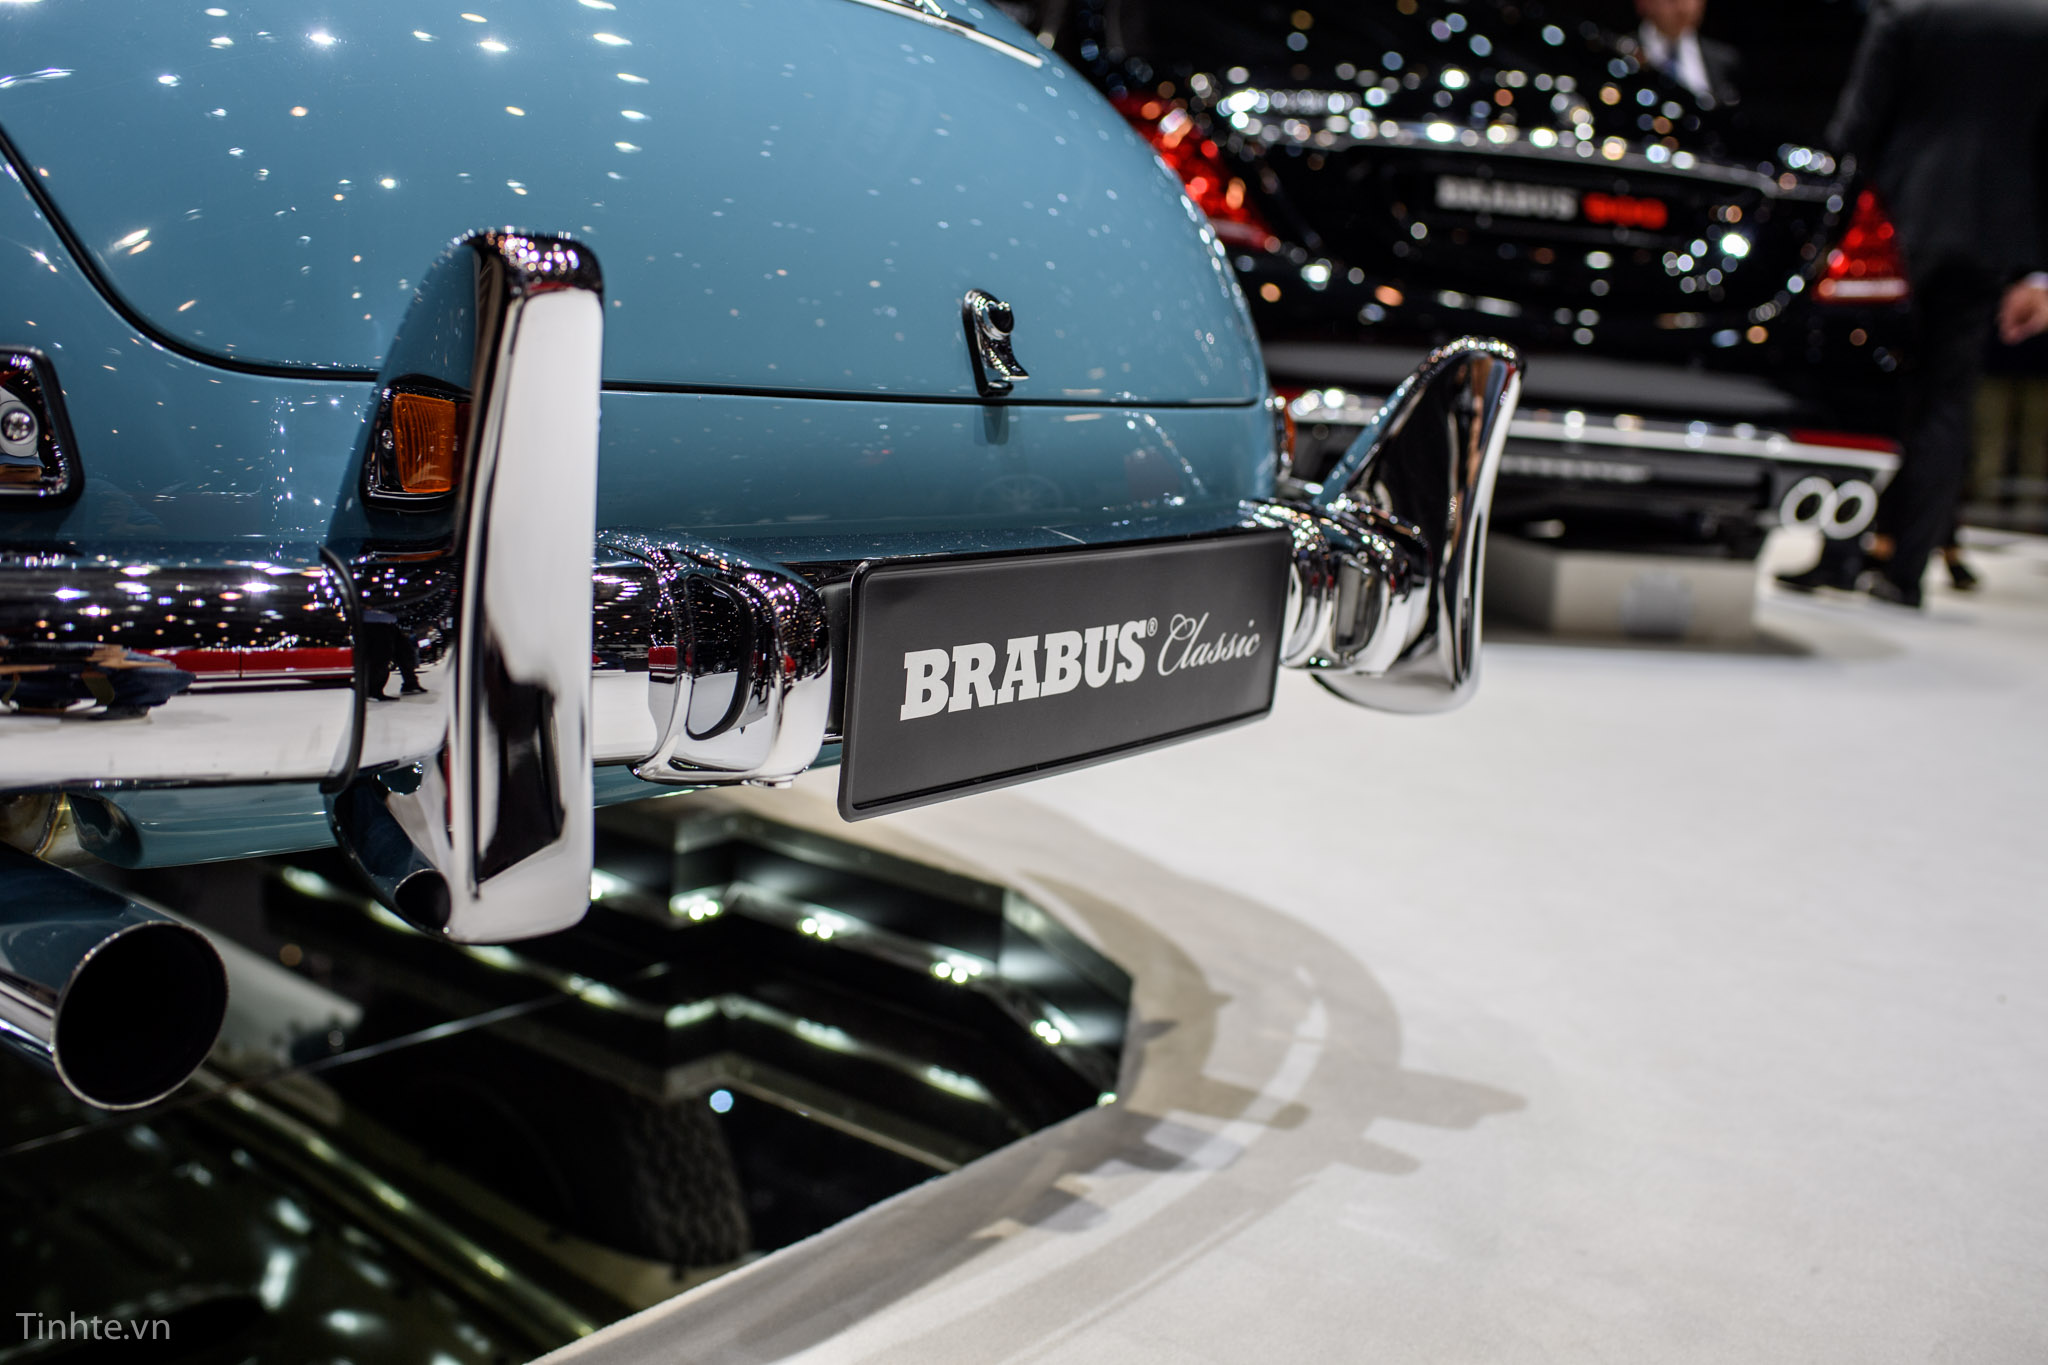 Brabus-Classic-300SL-7.jpg